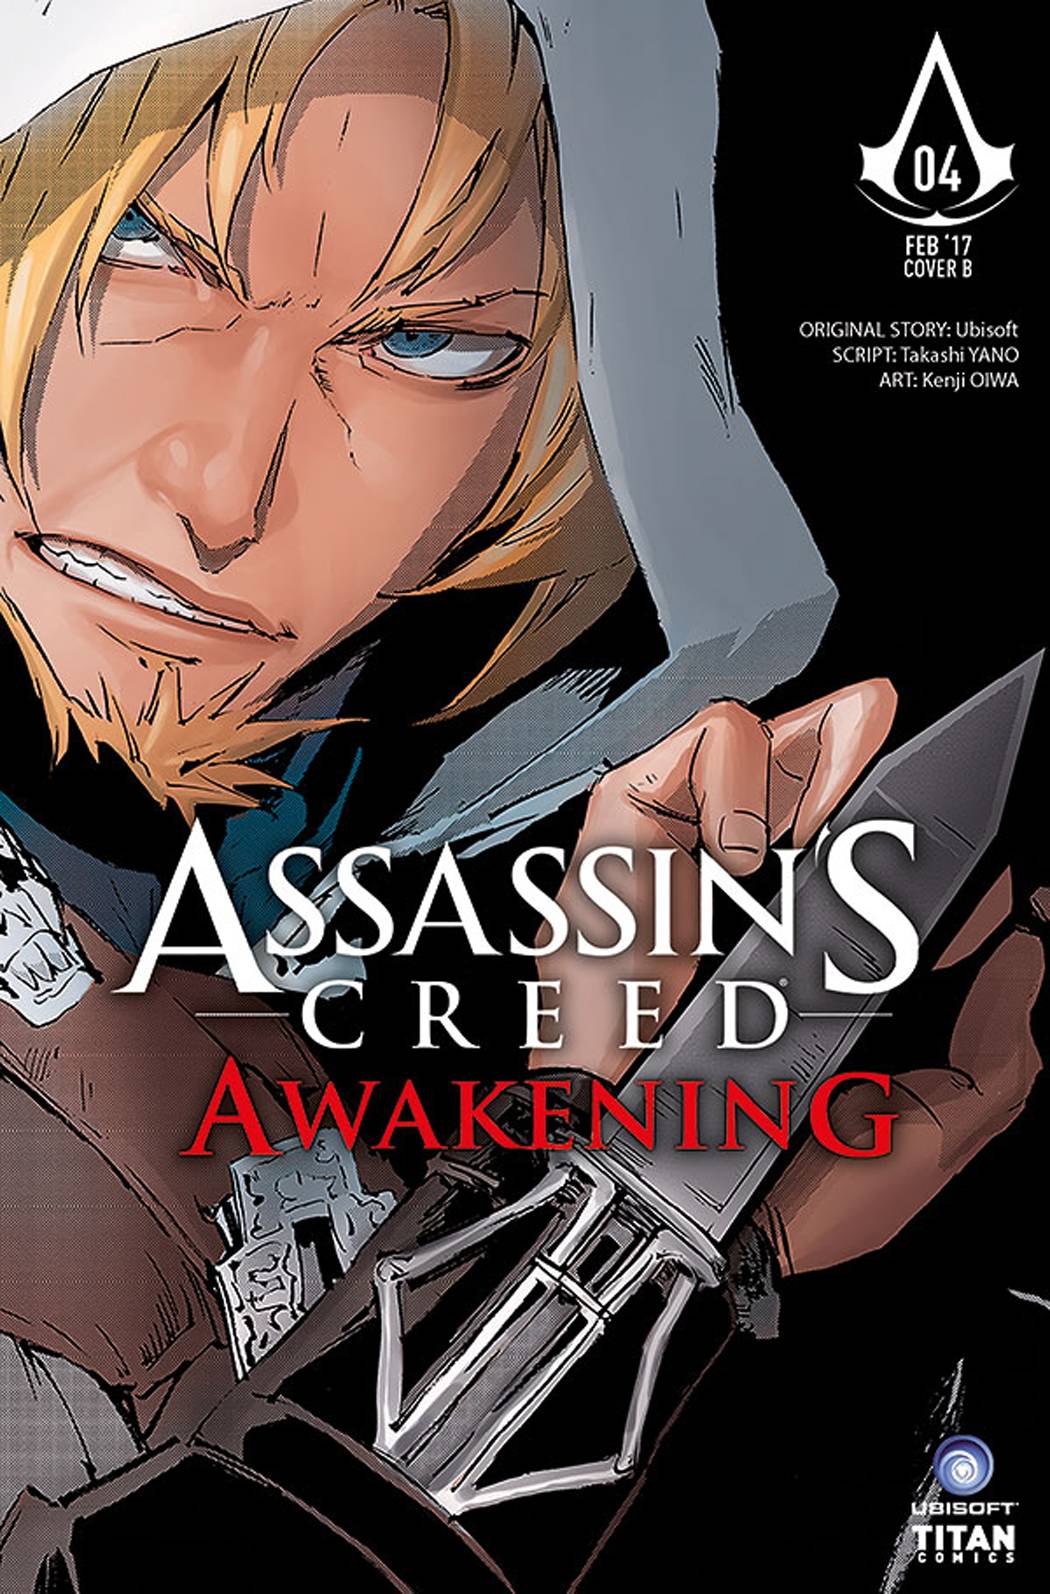 Assassins Creed Awakening #4 Cover A Kenji